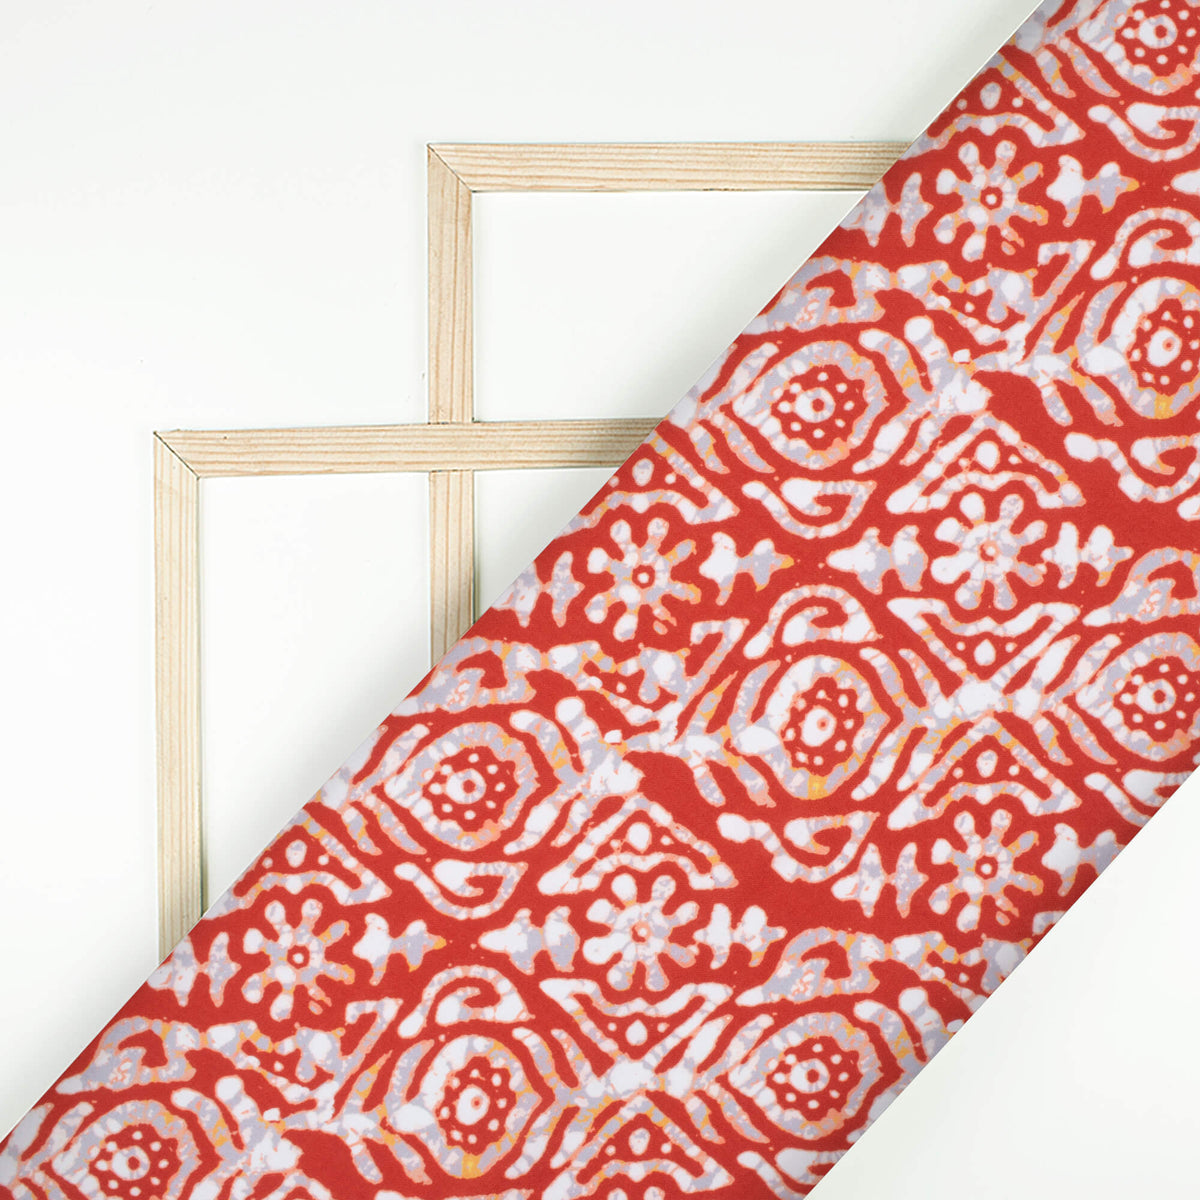 Brick Red And White Batik Pattern Digital Print Rayon Fabric